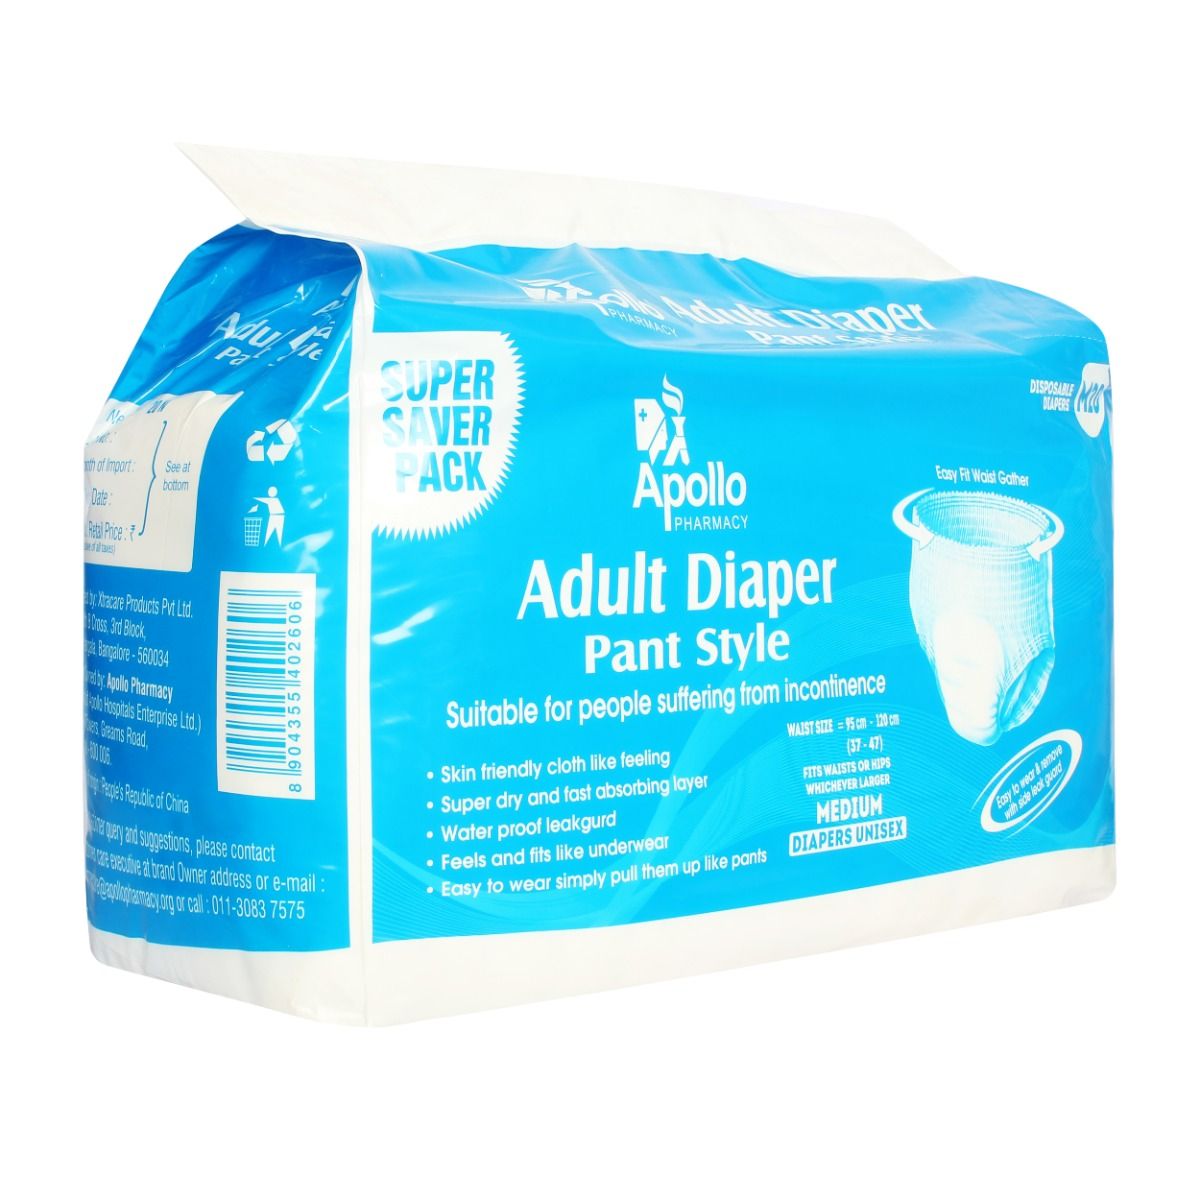 Apollo Life Adult Diaper Pants Medium, 20 Count, Pack of 1 